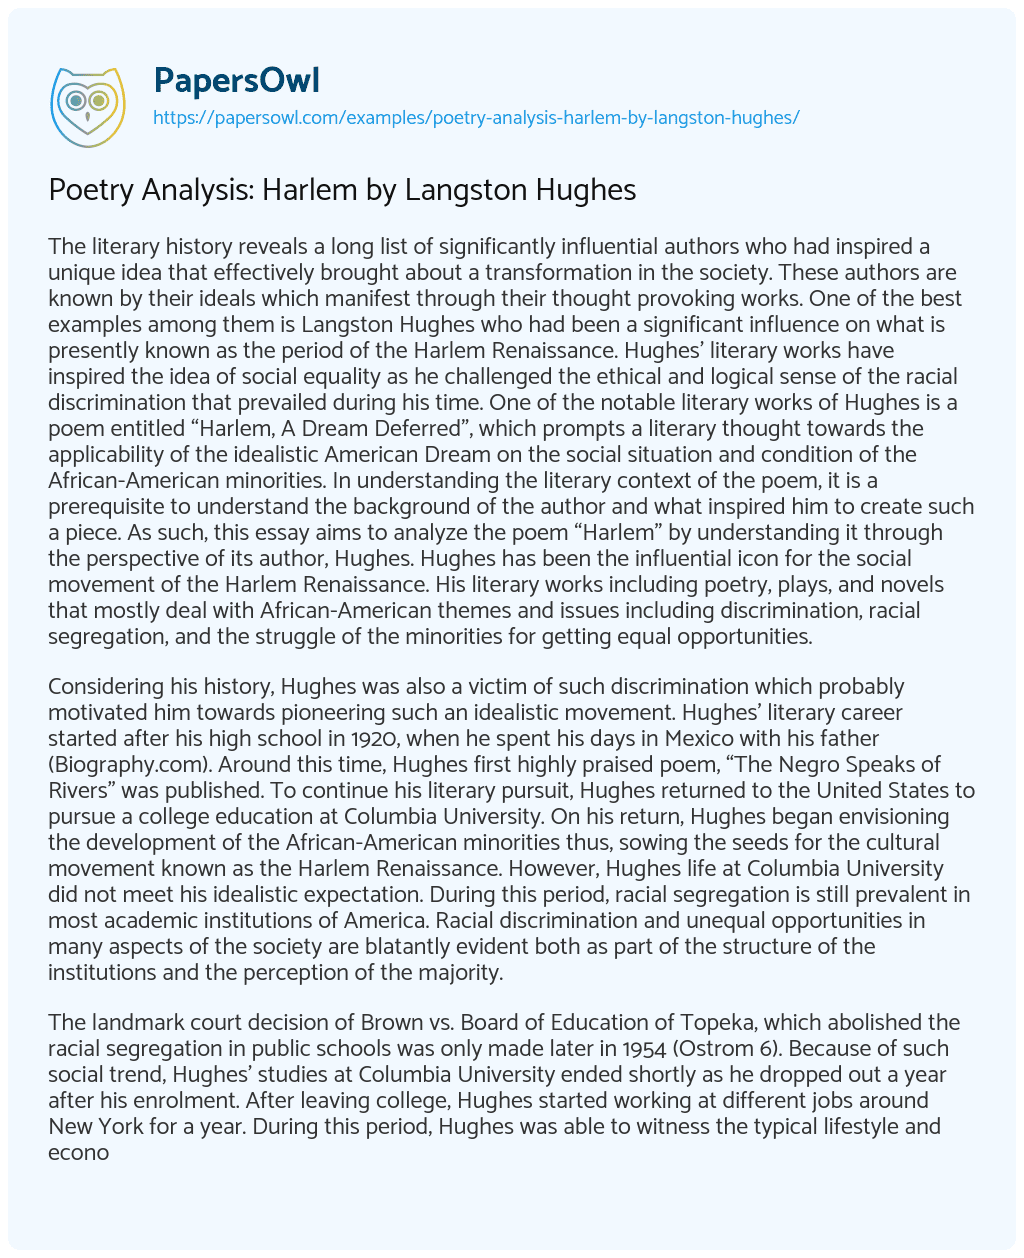 Essay on Poetry Analysis: Harlem by Langston Hughes